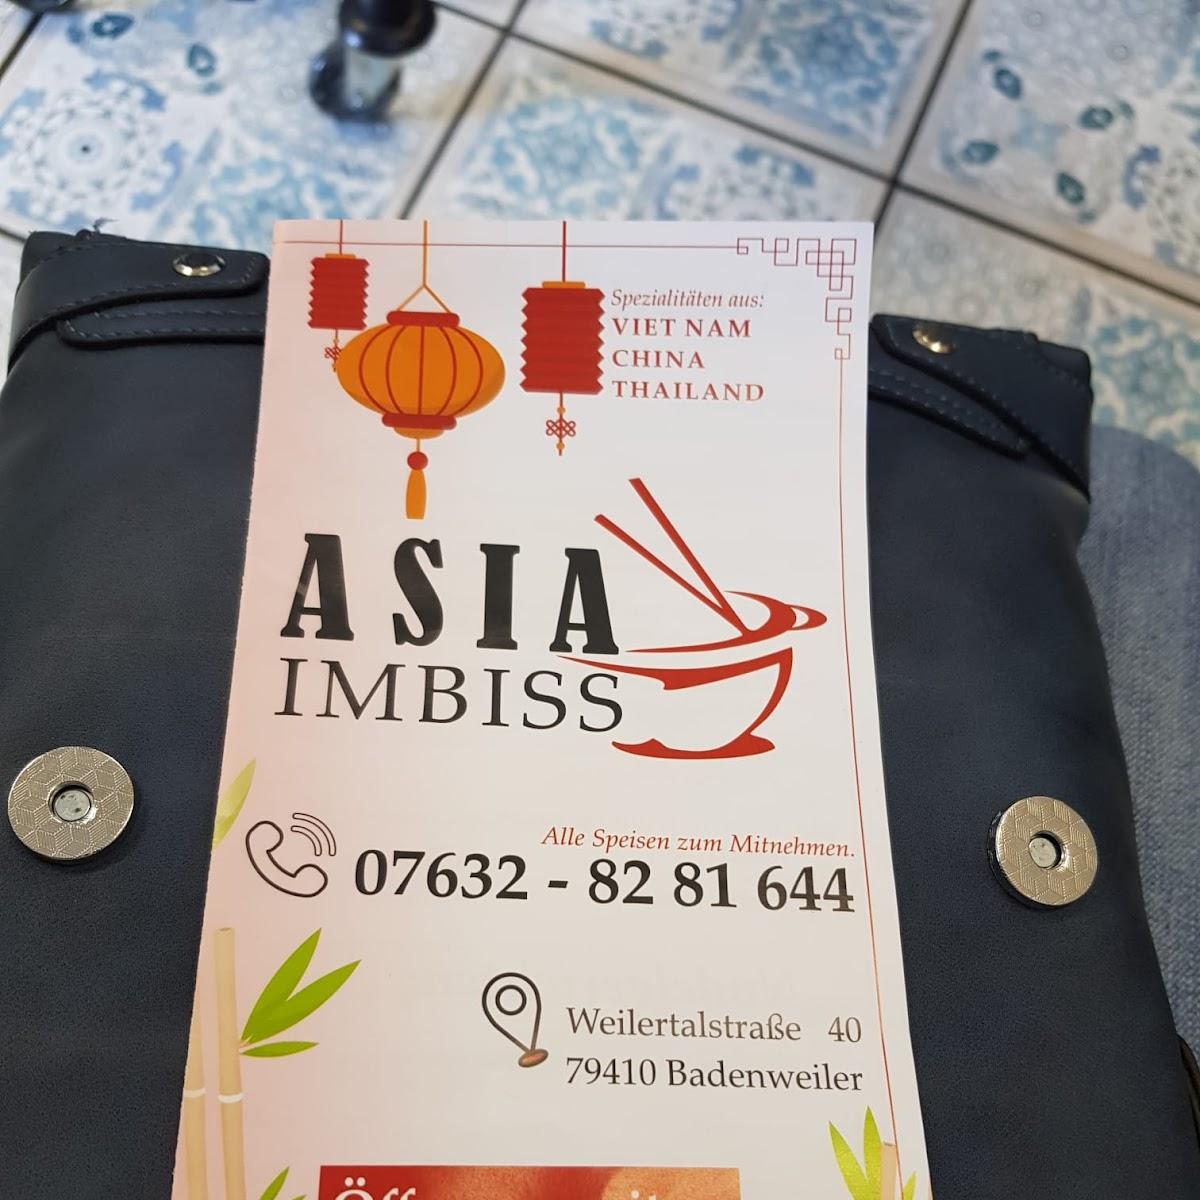 Restaurant "Asia Imbiss" in Badenweiler